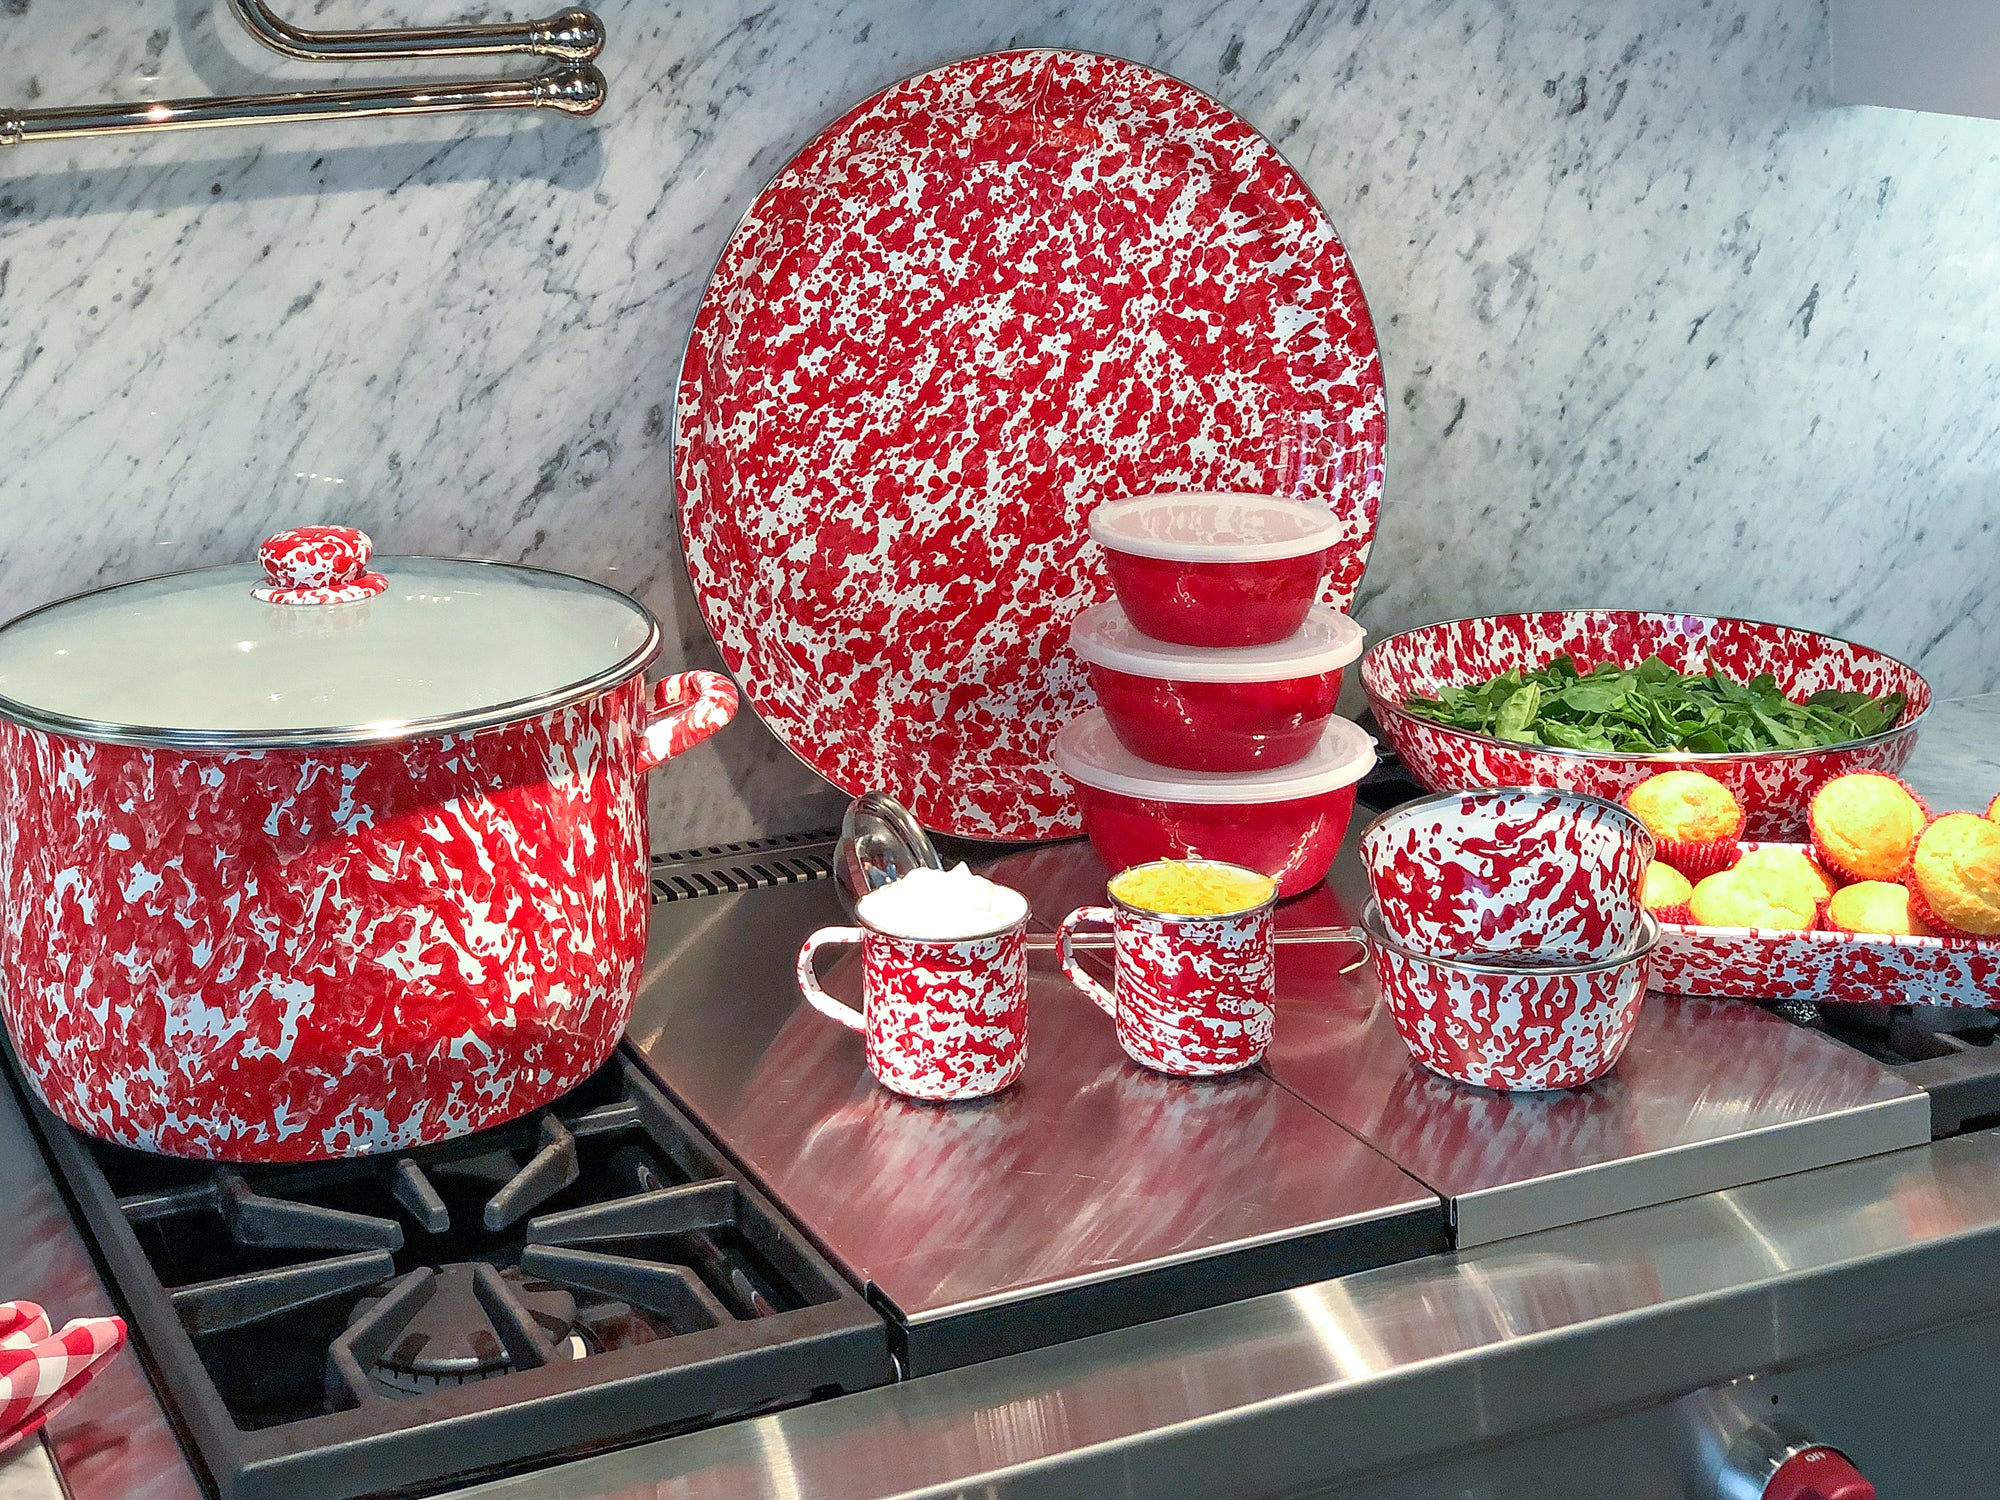 Cocinaware Red Enamel Stock Pot - Shop Stock Pots & Sauce Pans at H-E-B